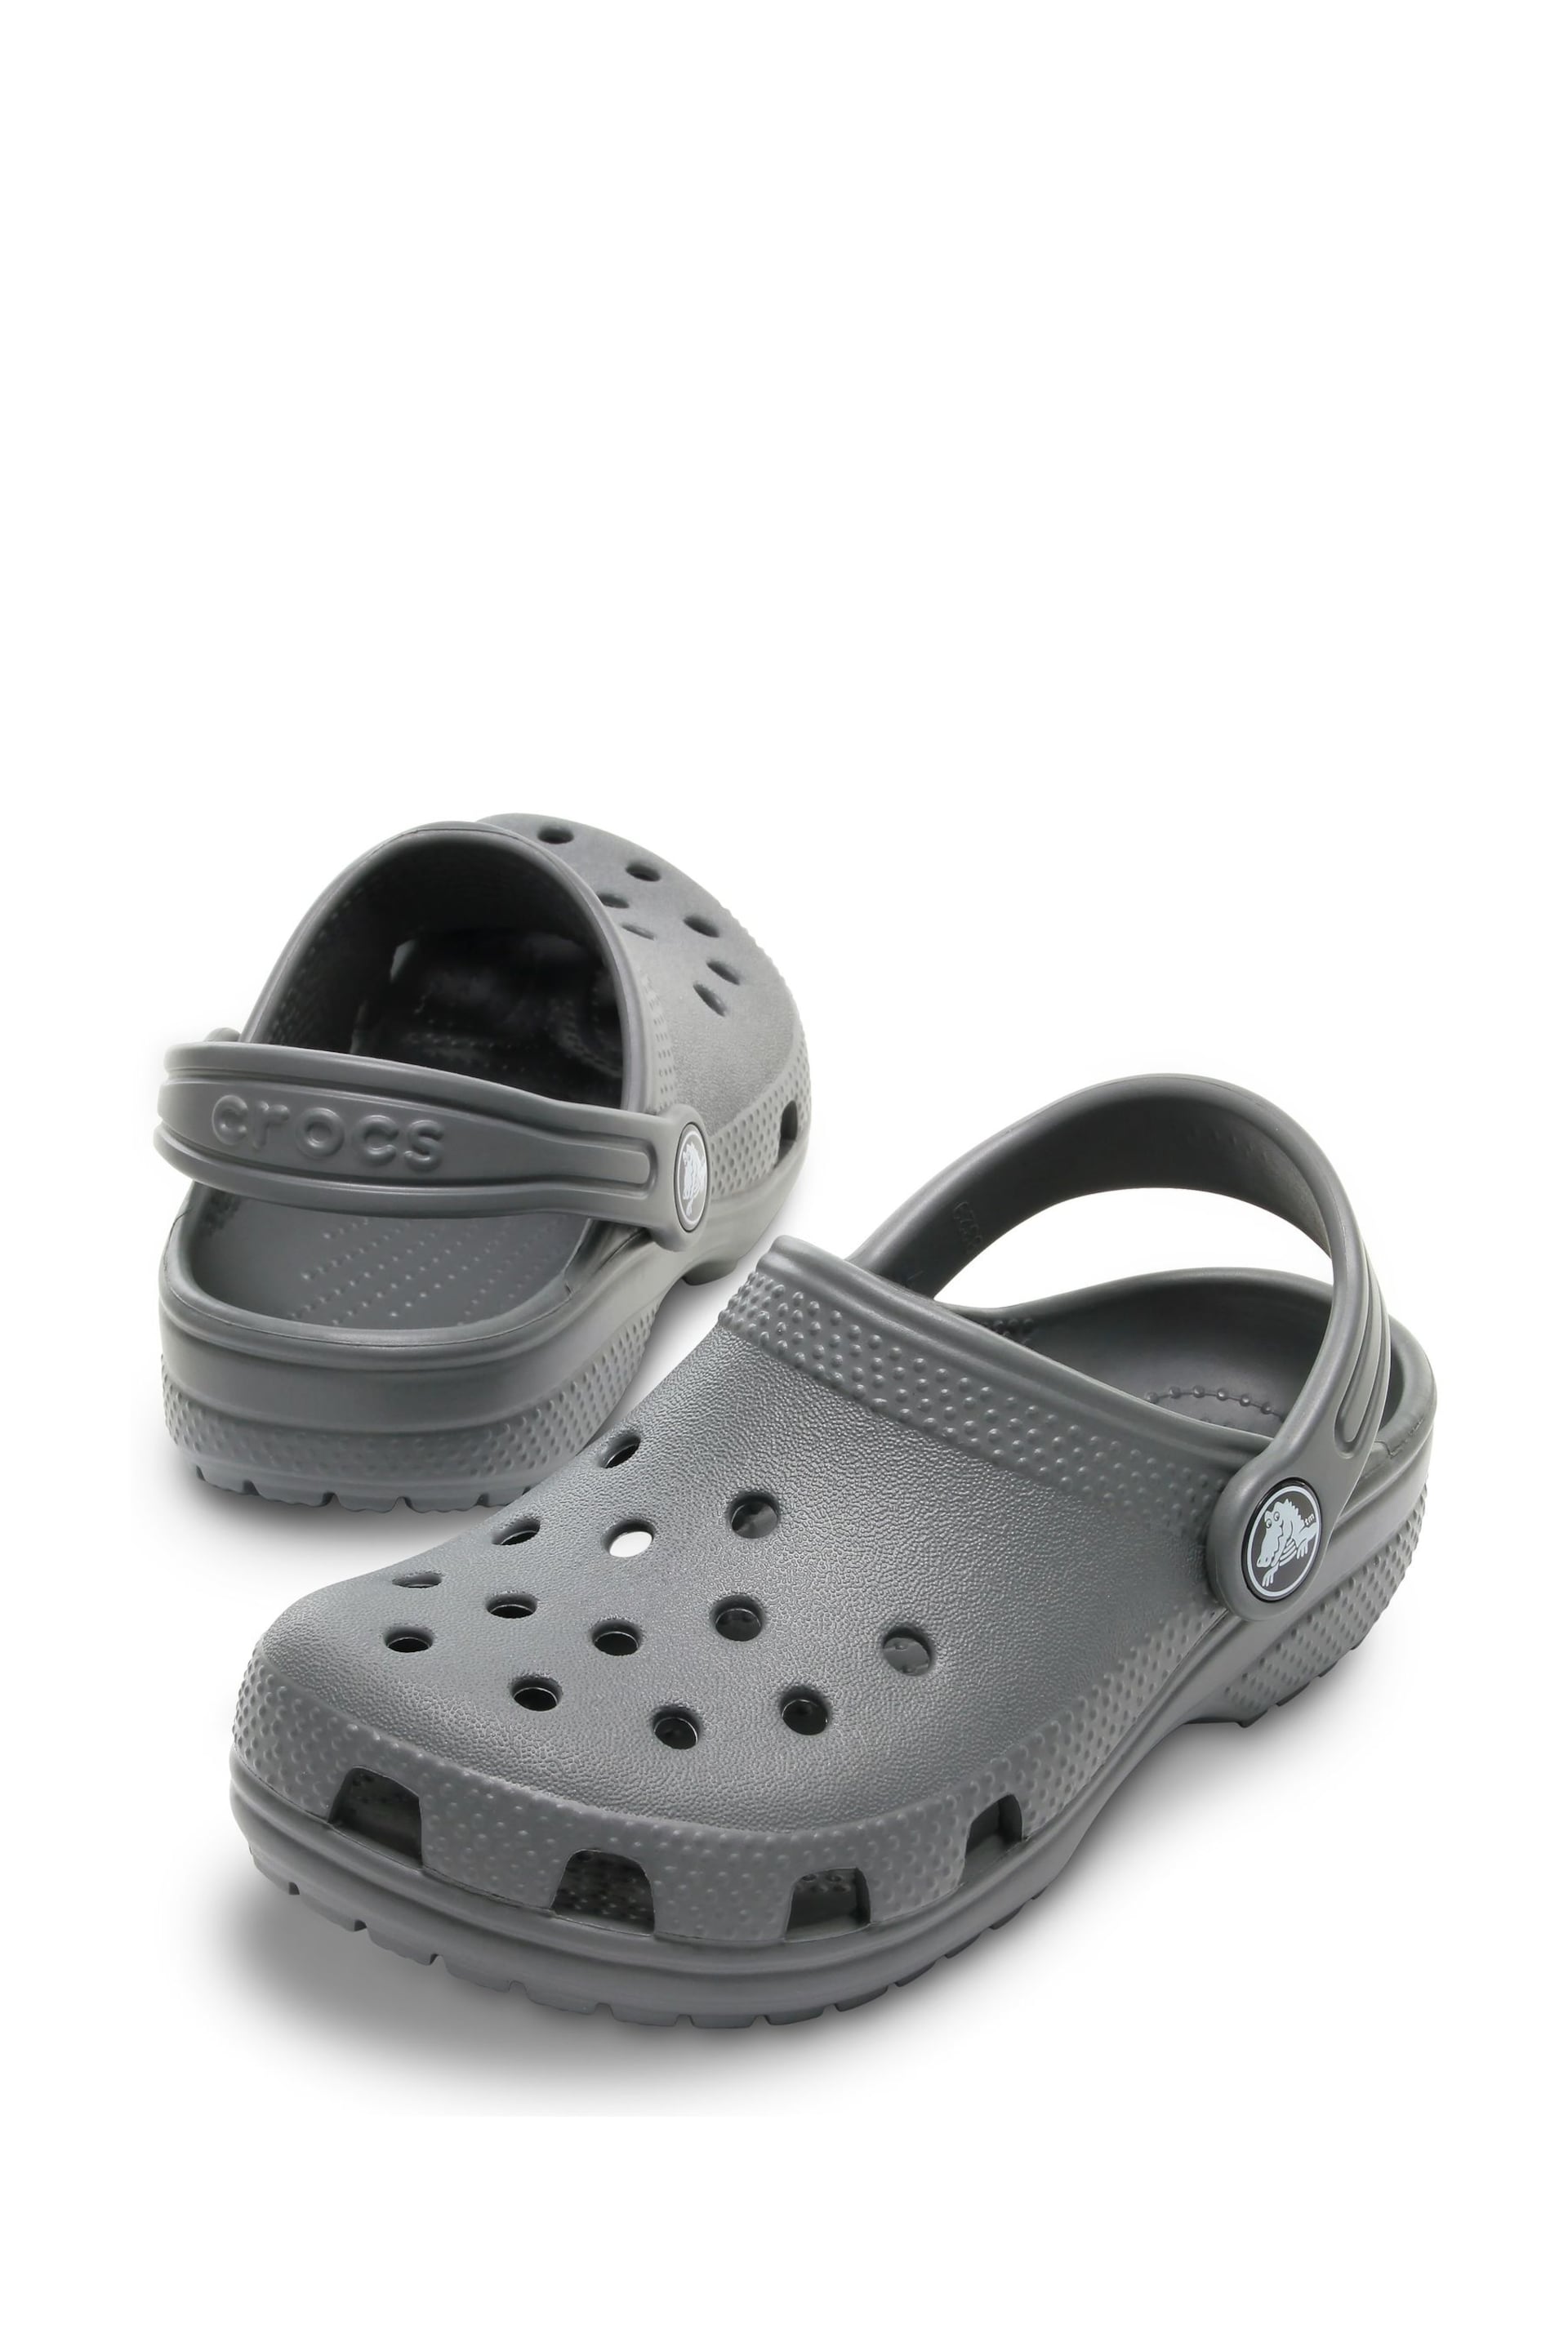 Crocs Classic Toddler Unisex Clogs - Image 4 of 8